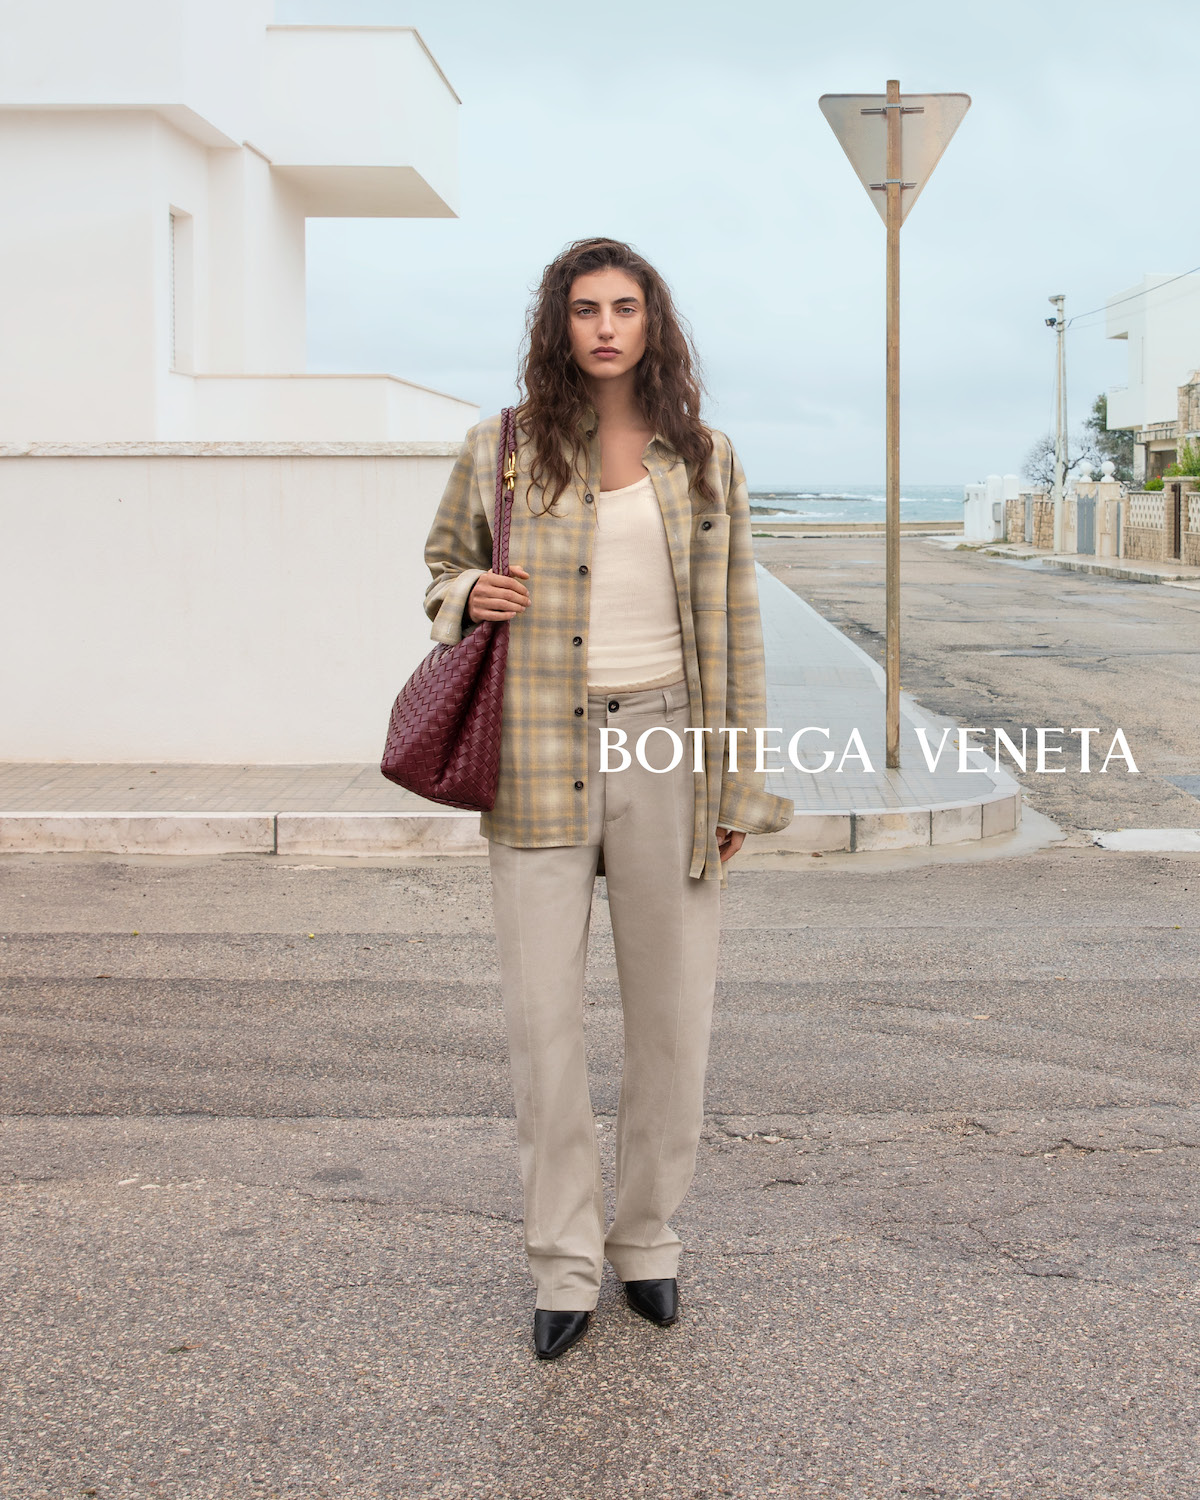 Bottega Veneta's Andiamo Bag Is The Classic-In-The-Making